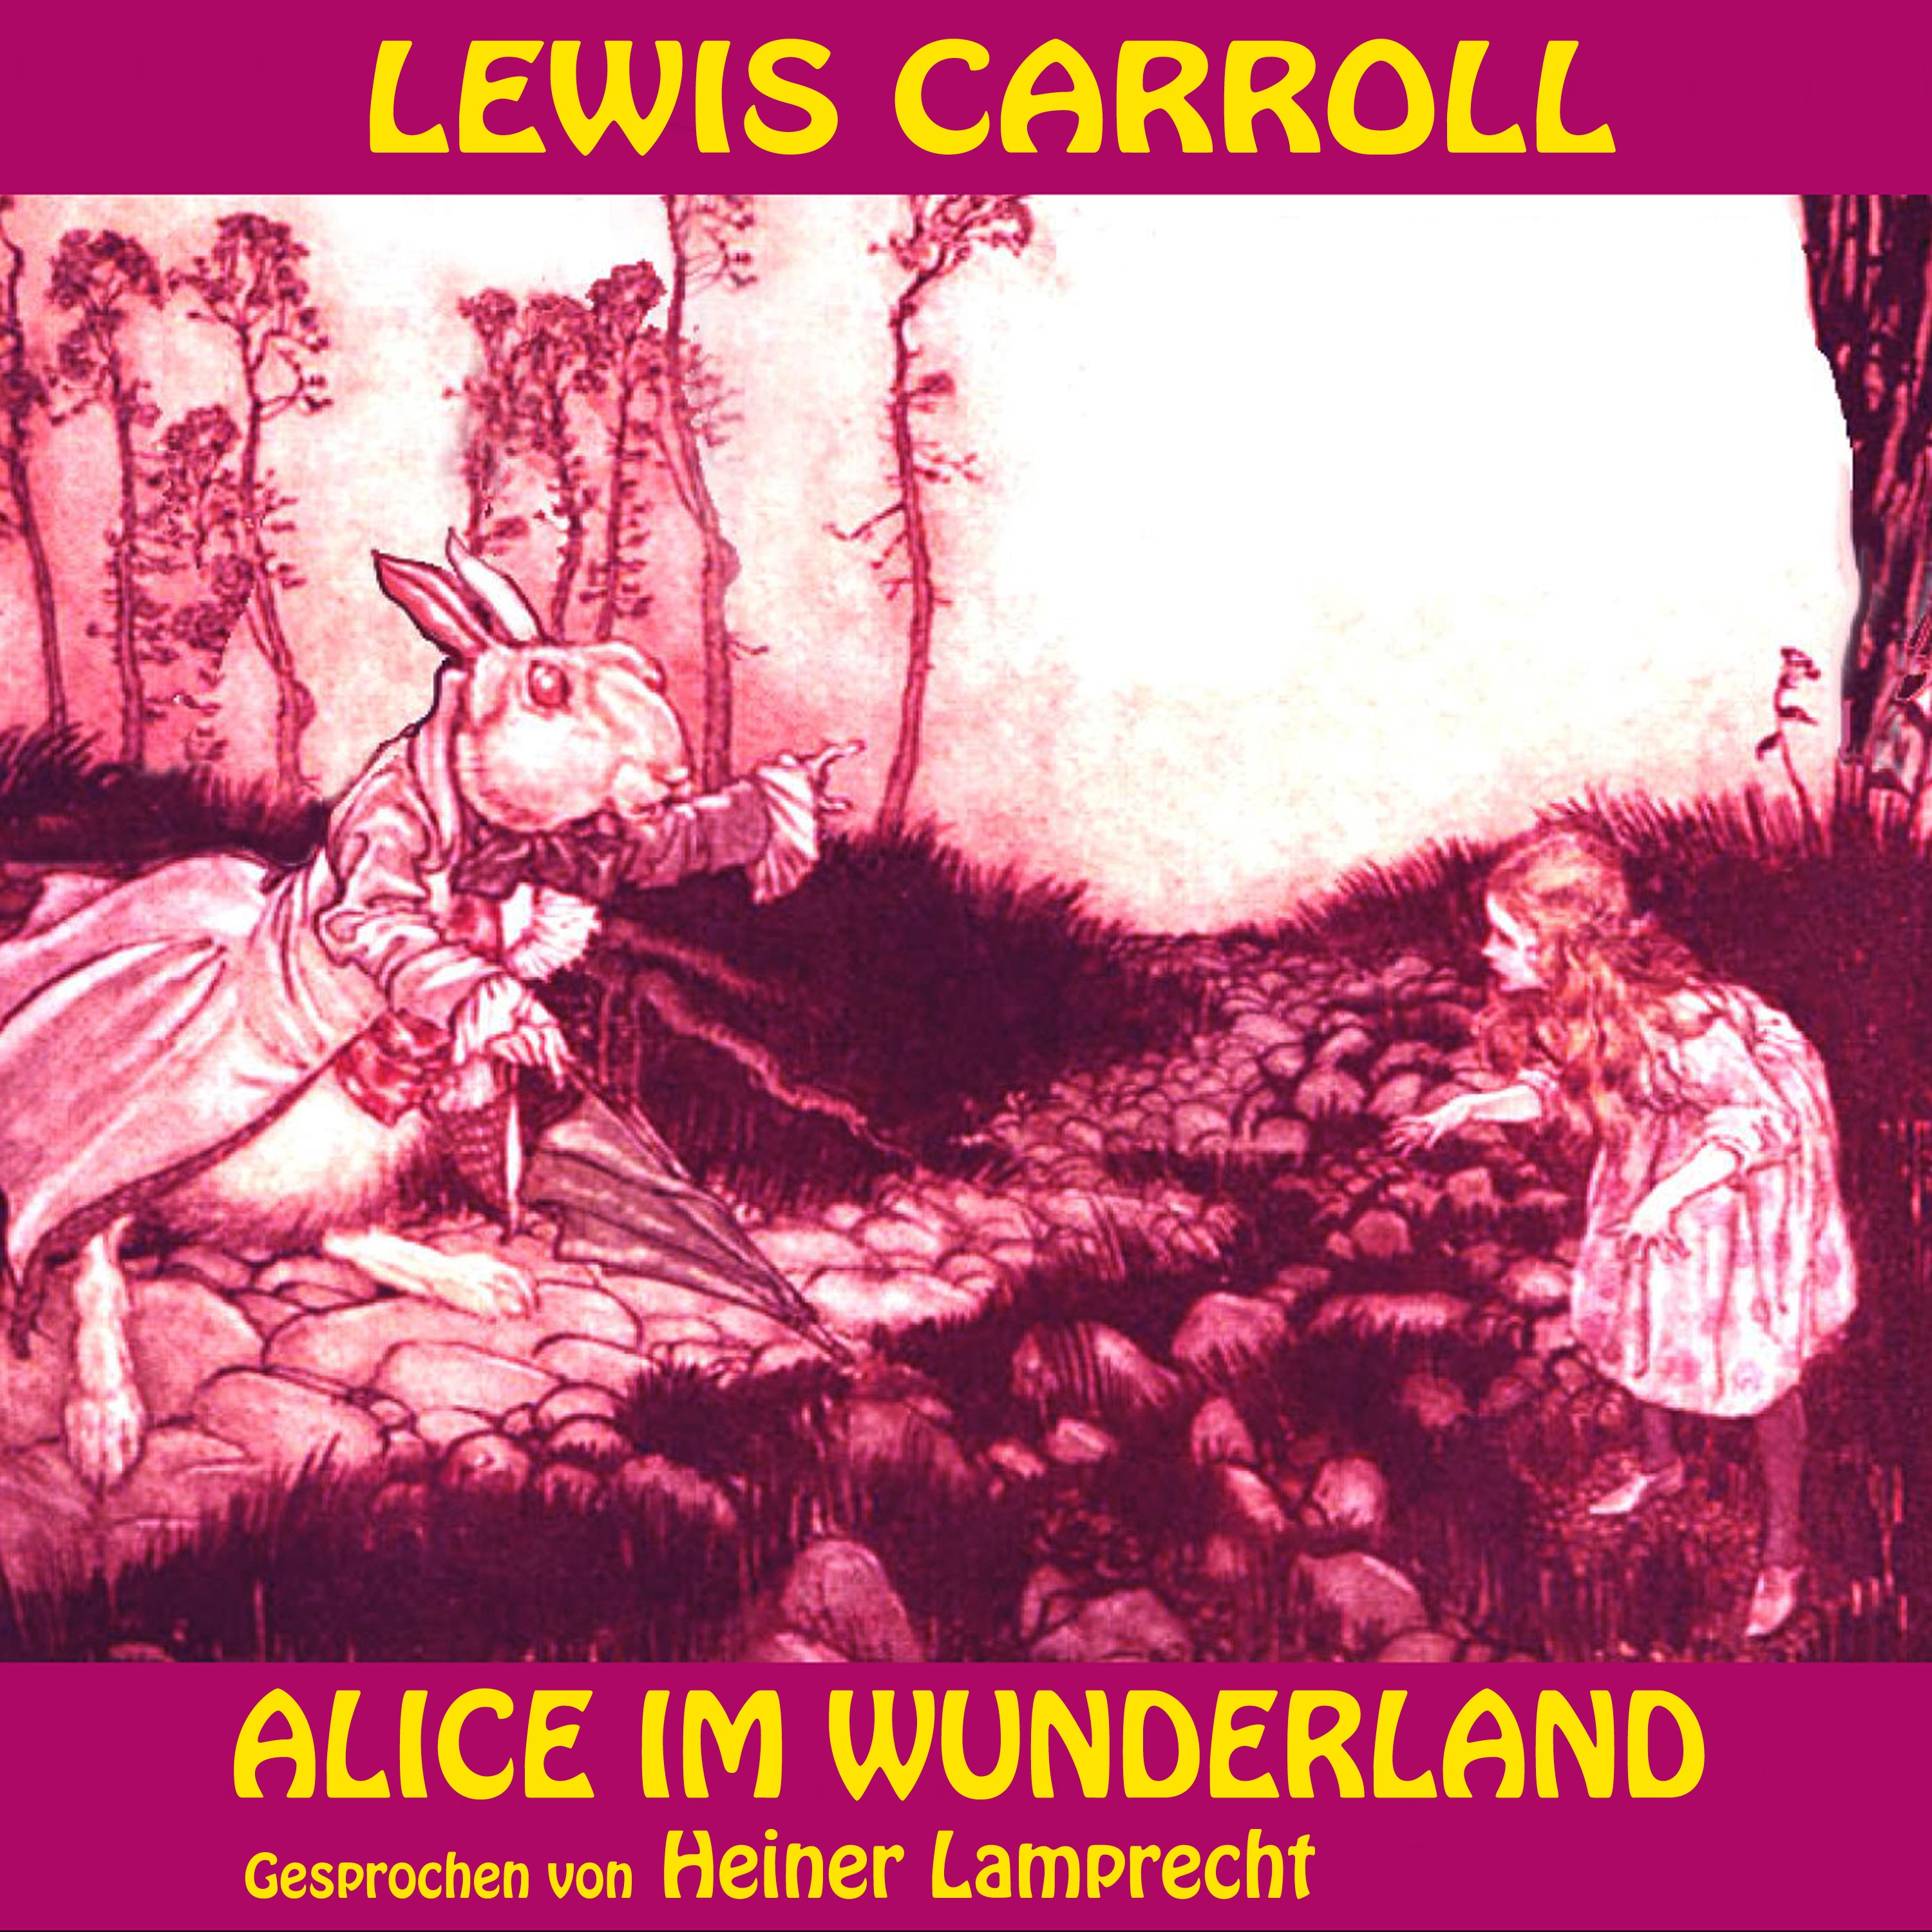 Kapitel 12: Alice im Wunderland (Teil 22)